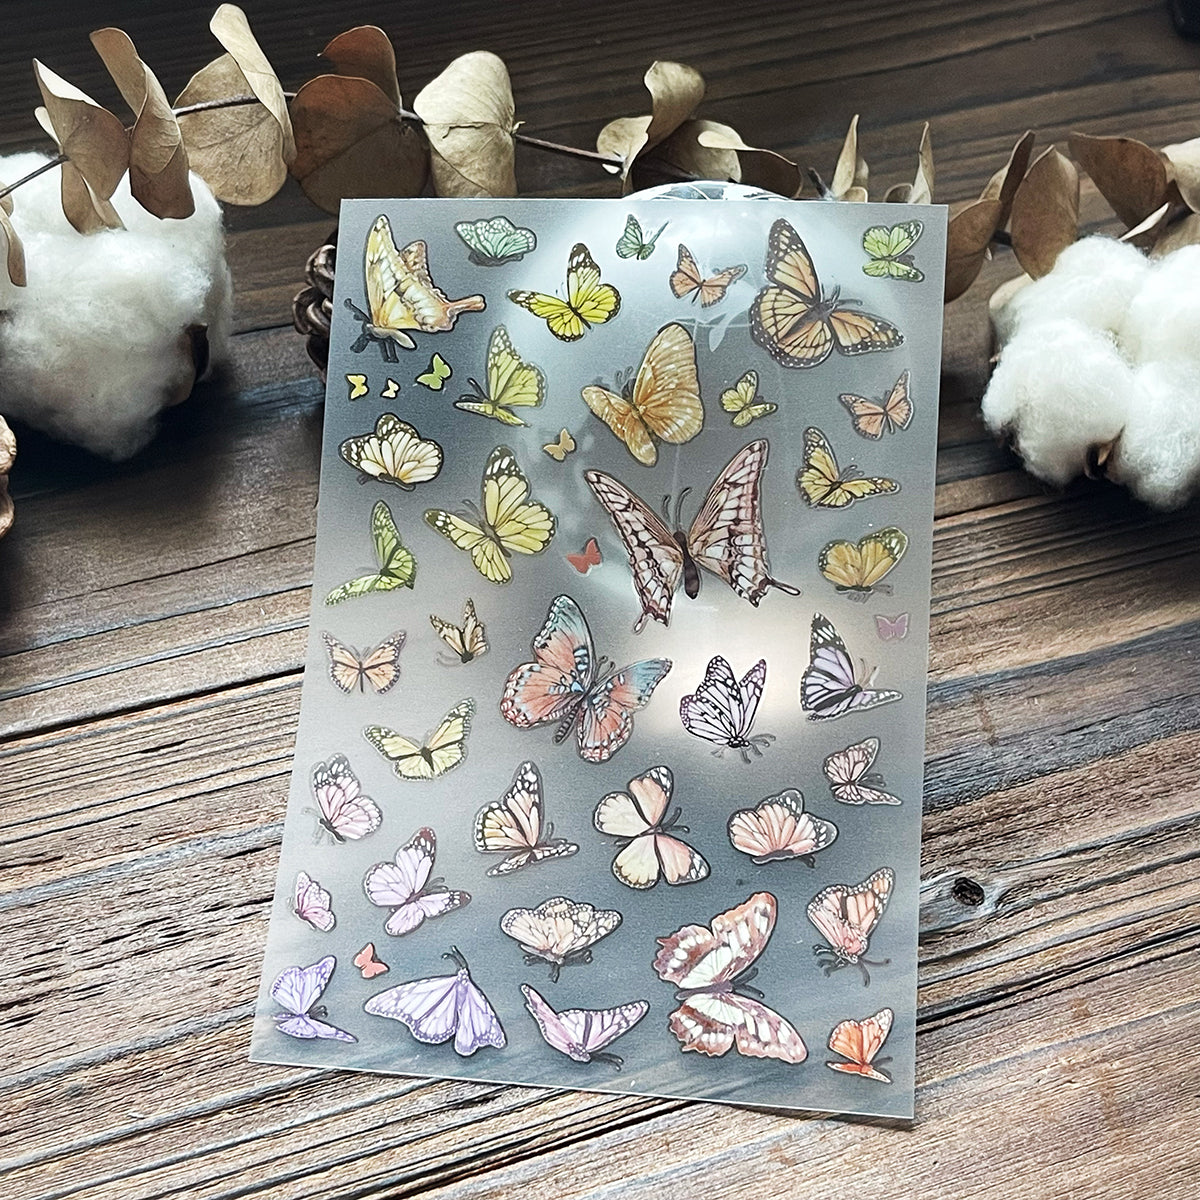 Battypei Transfer Stickers "Dancing Butterflies"